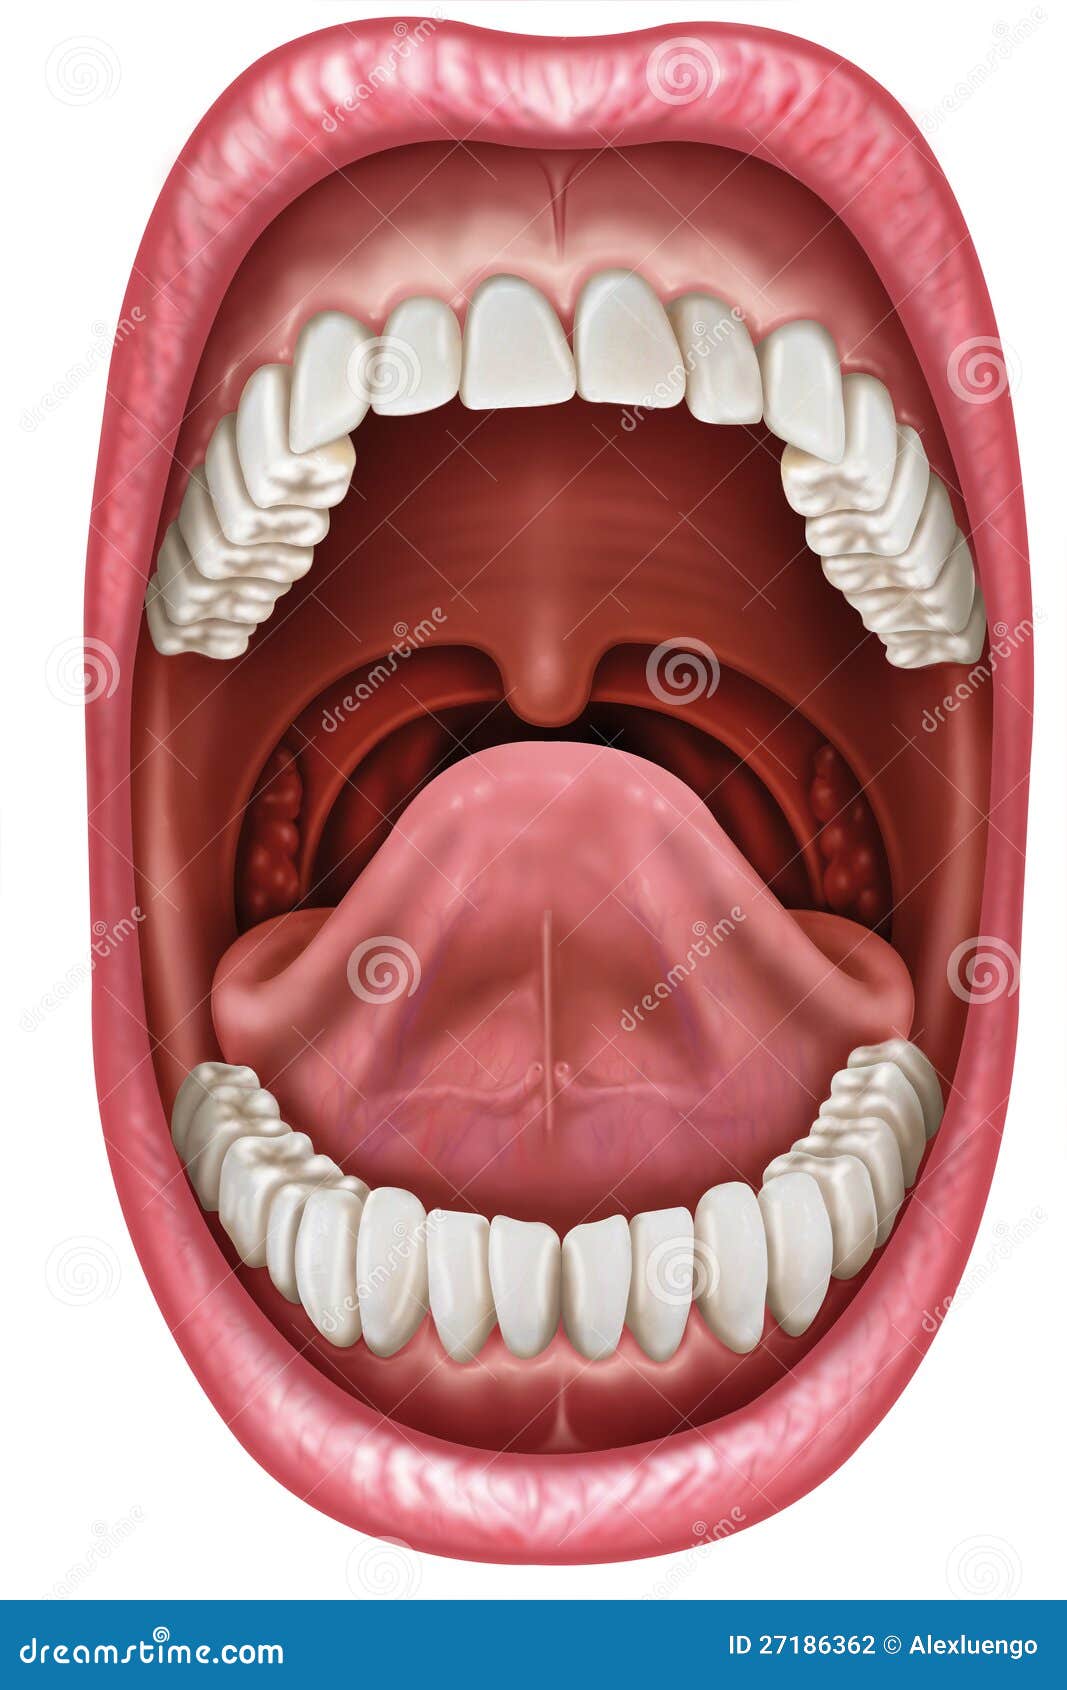 Anatomy Mouth Stock Photography - Image: 27186362